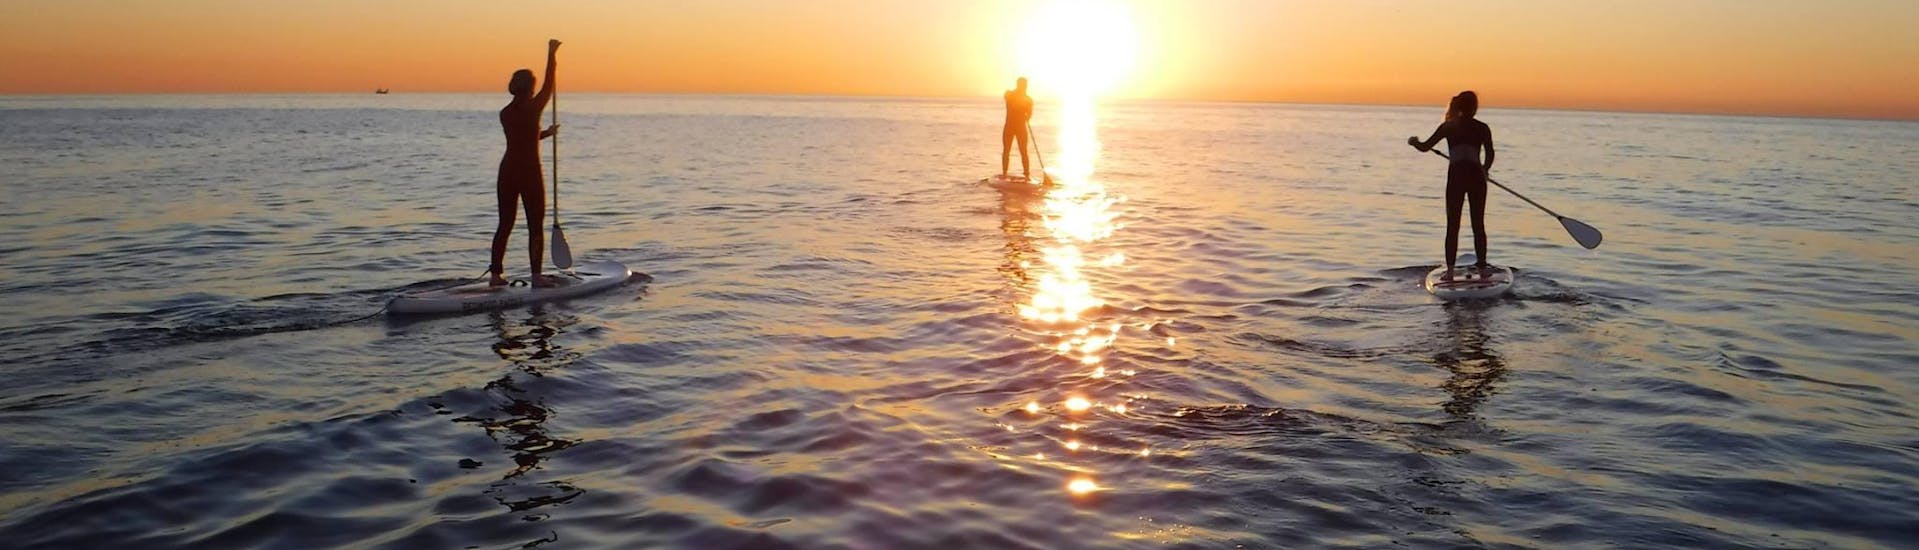 Stand Up Paddle verhuur in Barcelona vanaf 6 jaar voor gevorderde surfers.